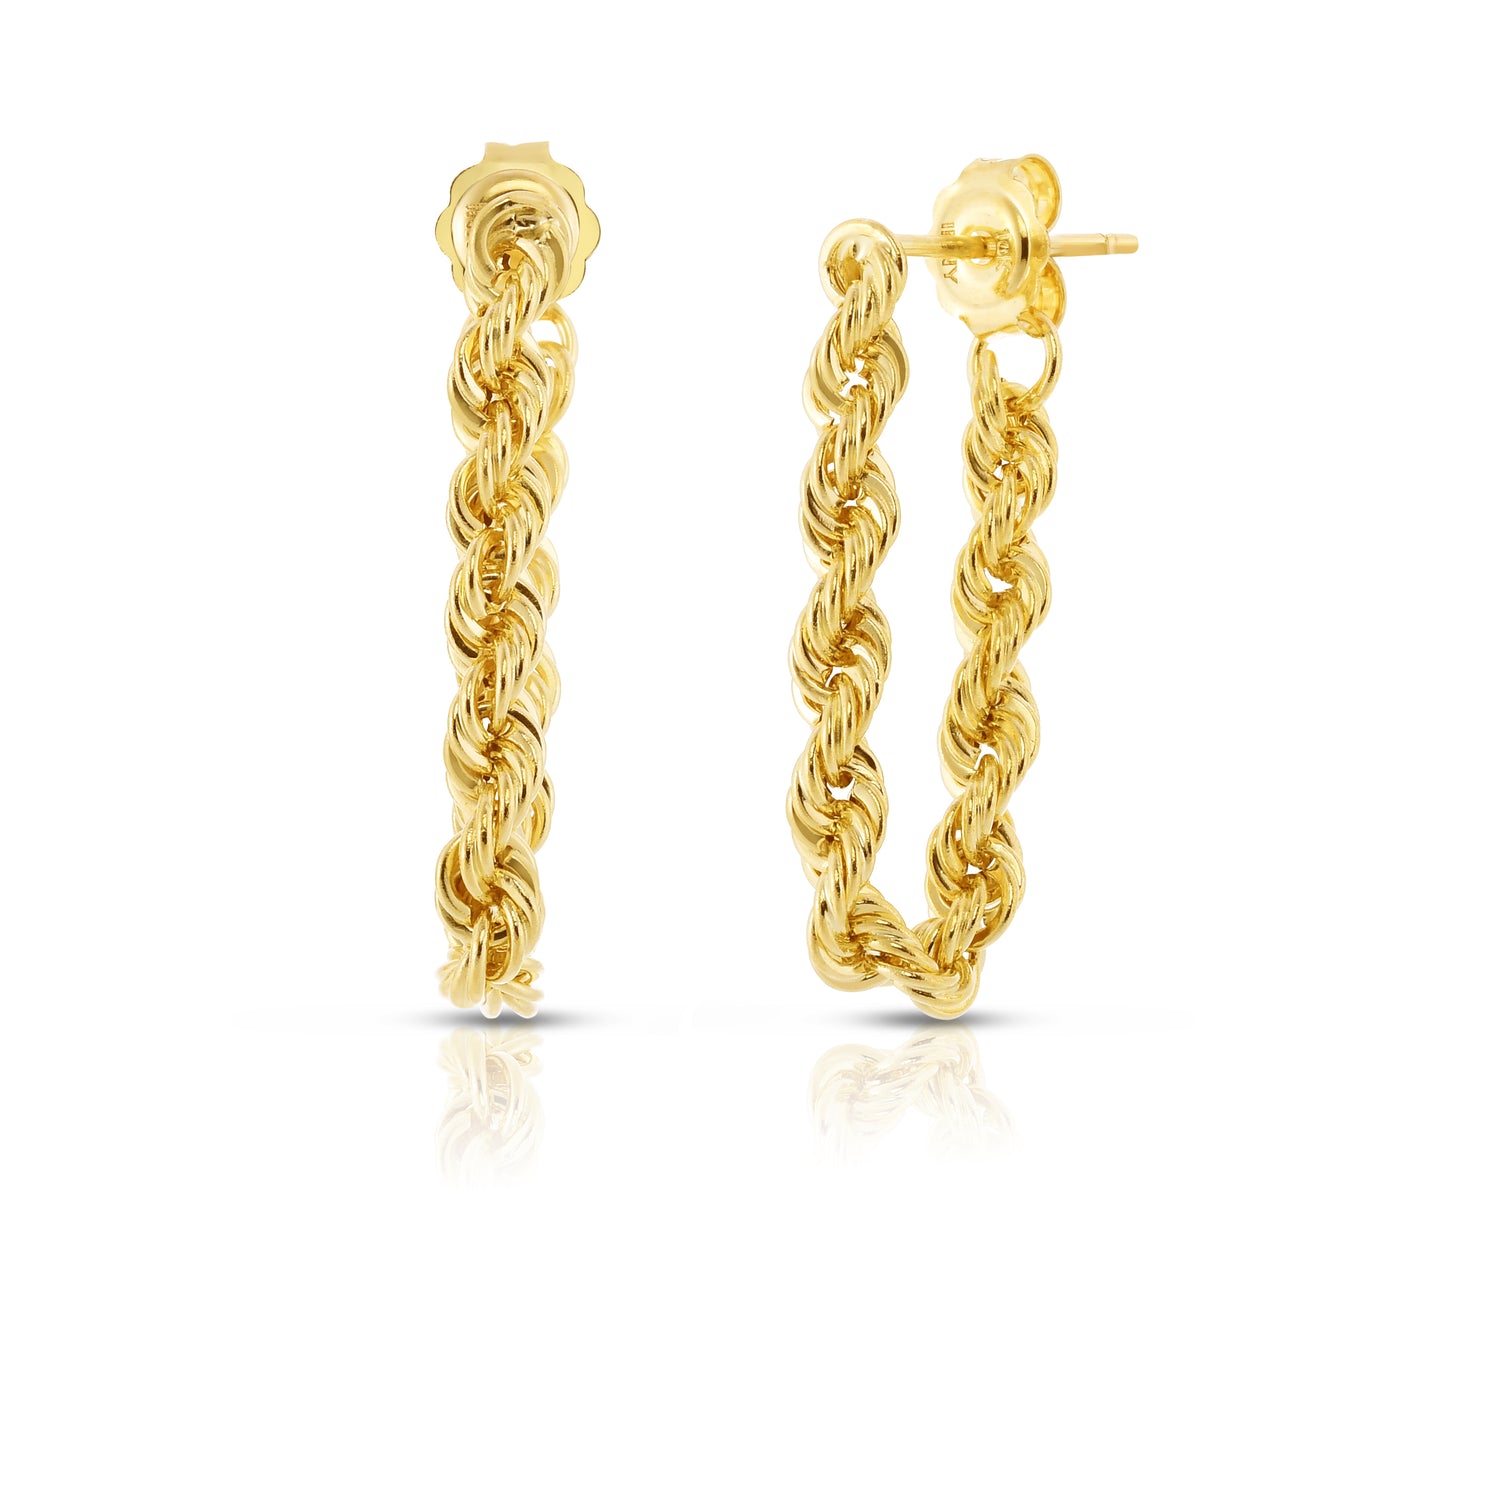 10k Yellow Gold 3.2mm Rope Chain Drop Earrings, Length: 1